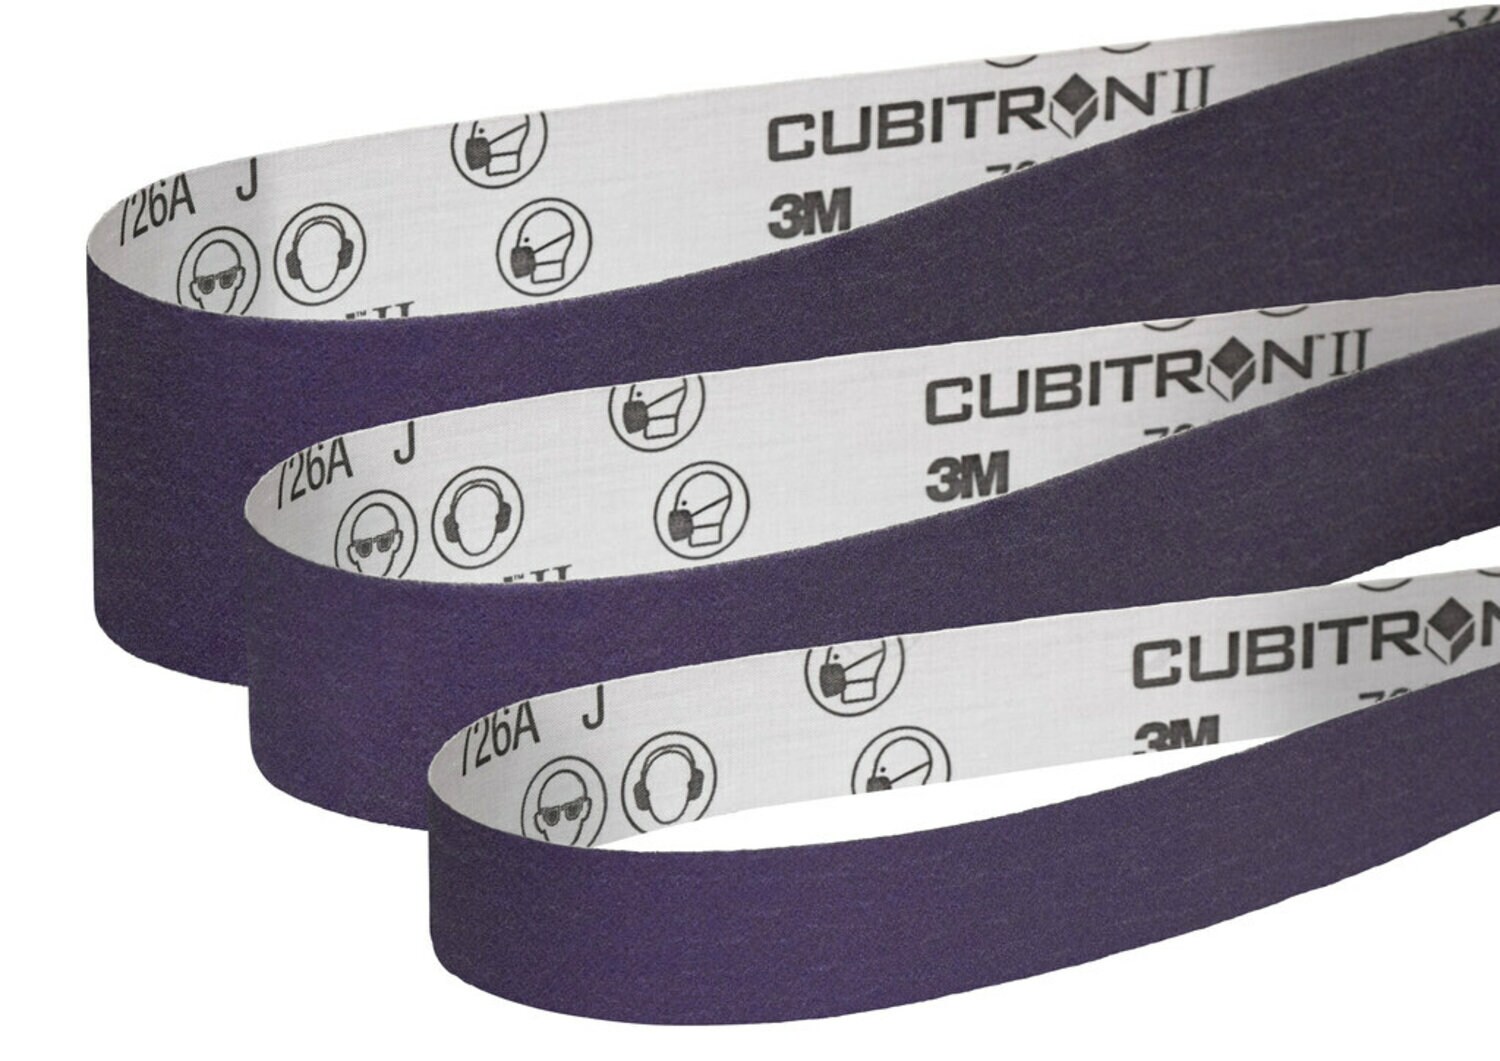 7100289604 - 3M Cubitron II Cloth Belt 726A, 320+ J-weight, Config